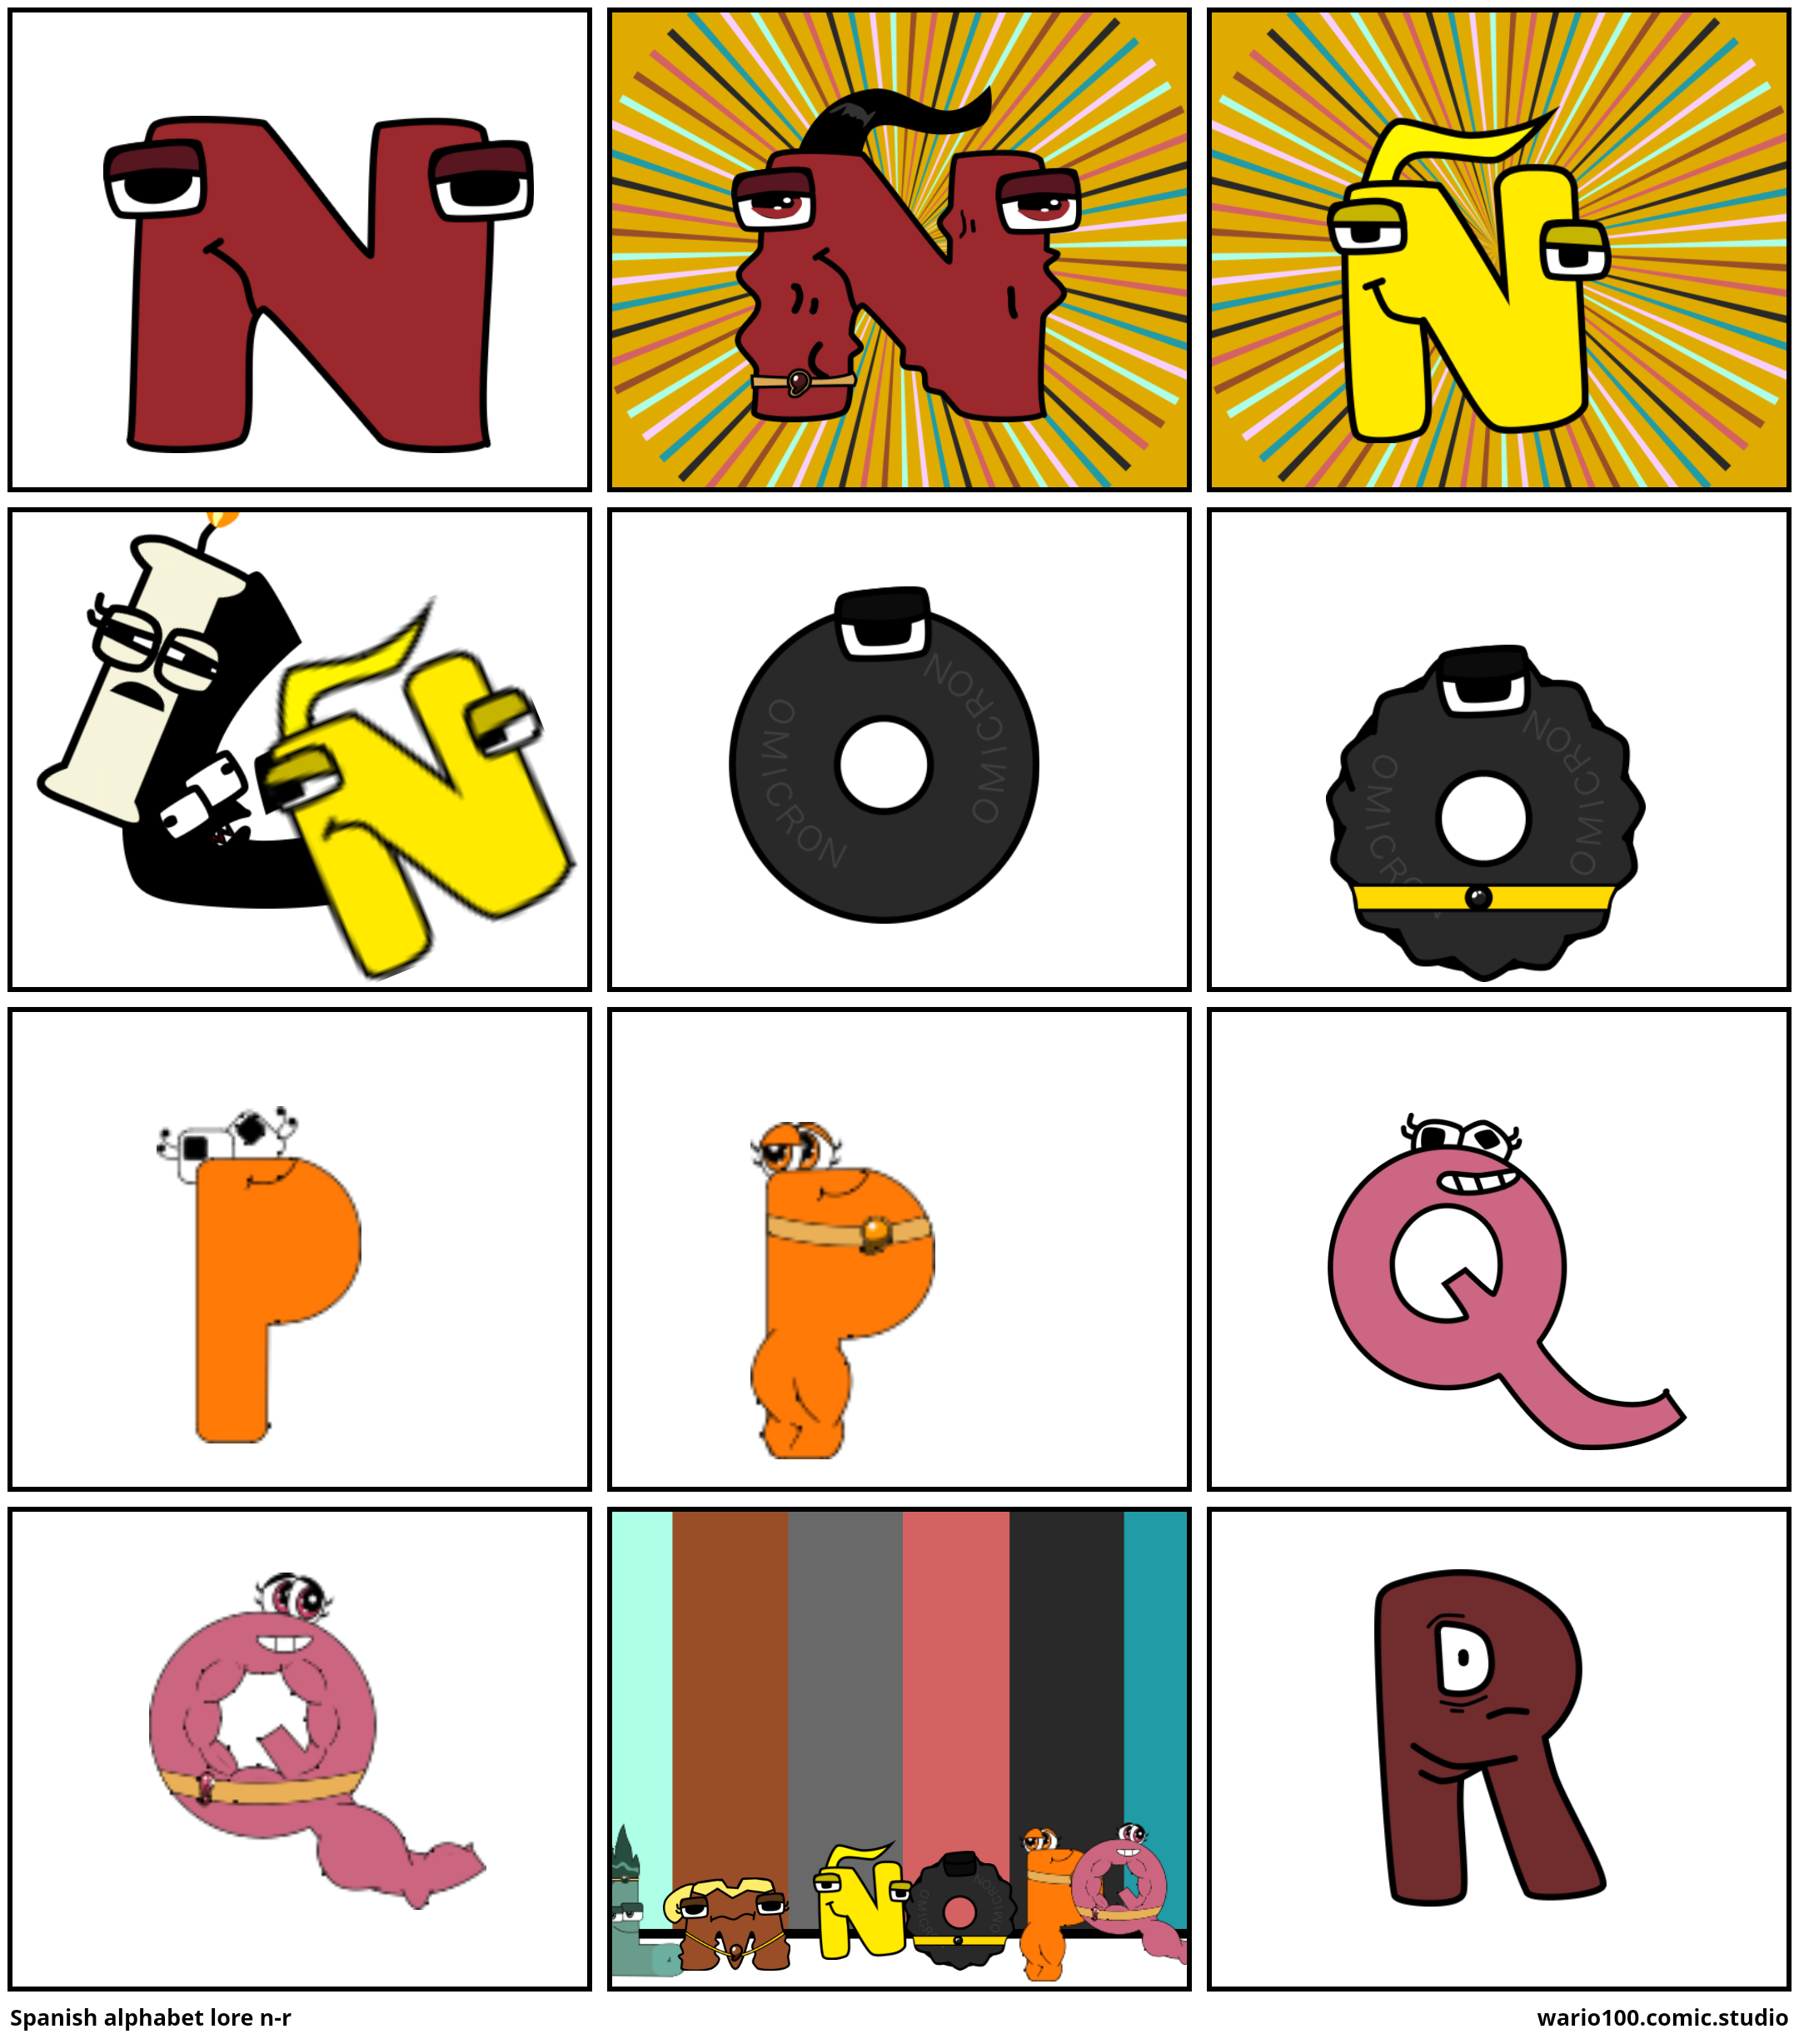 Spanish alphabet lore n-r